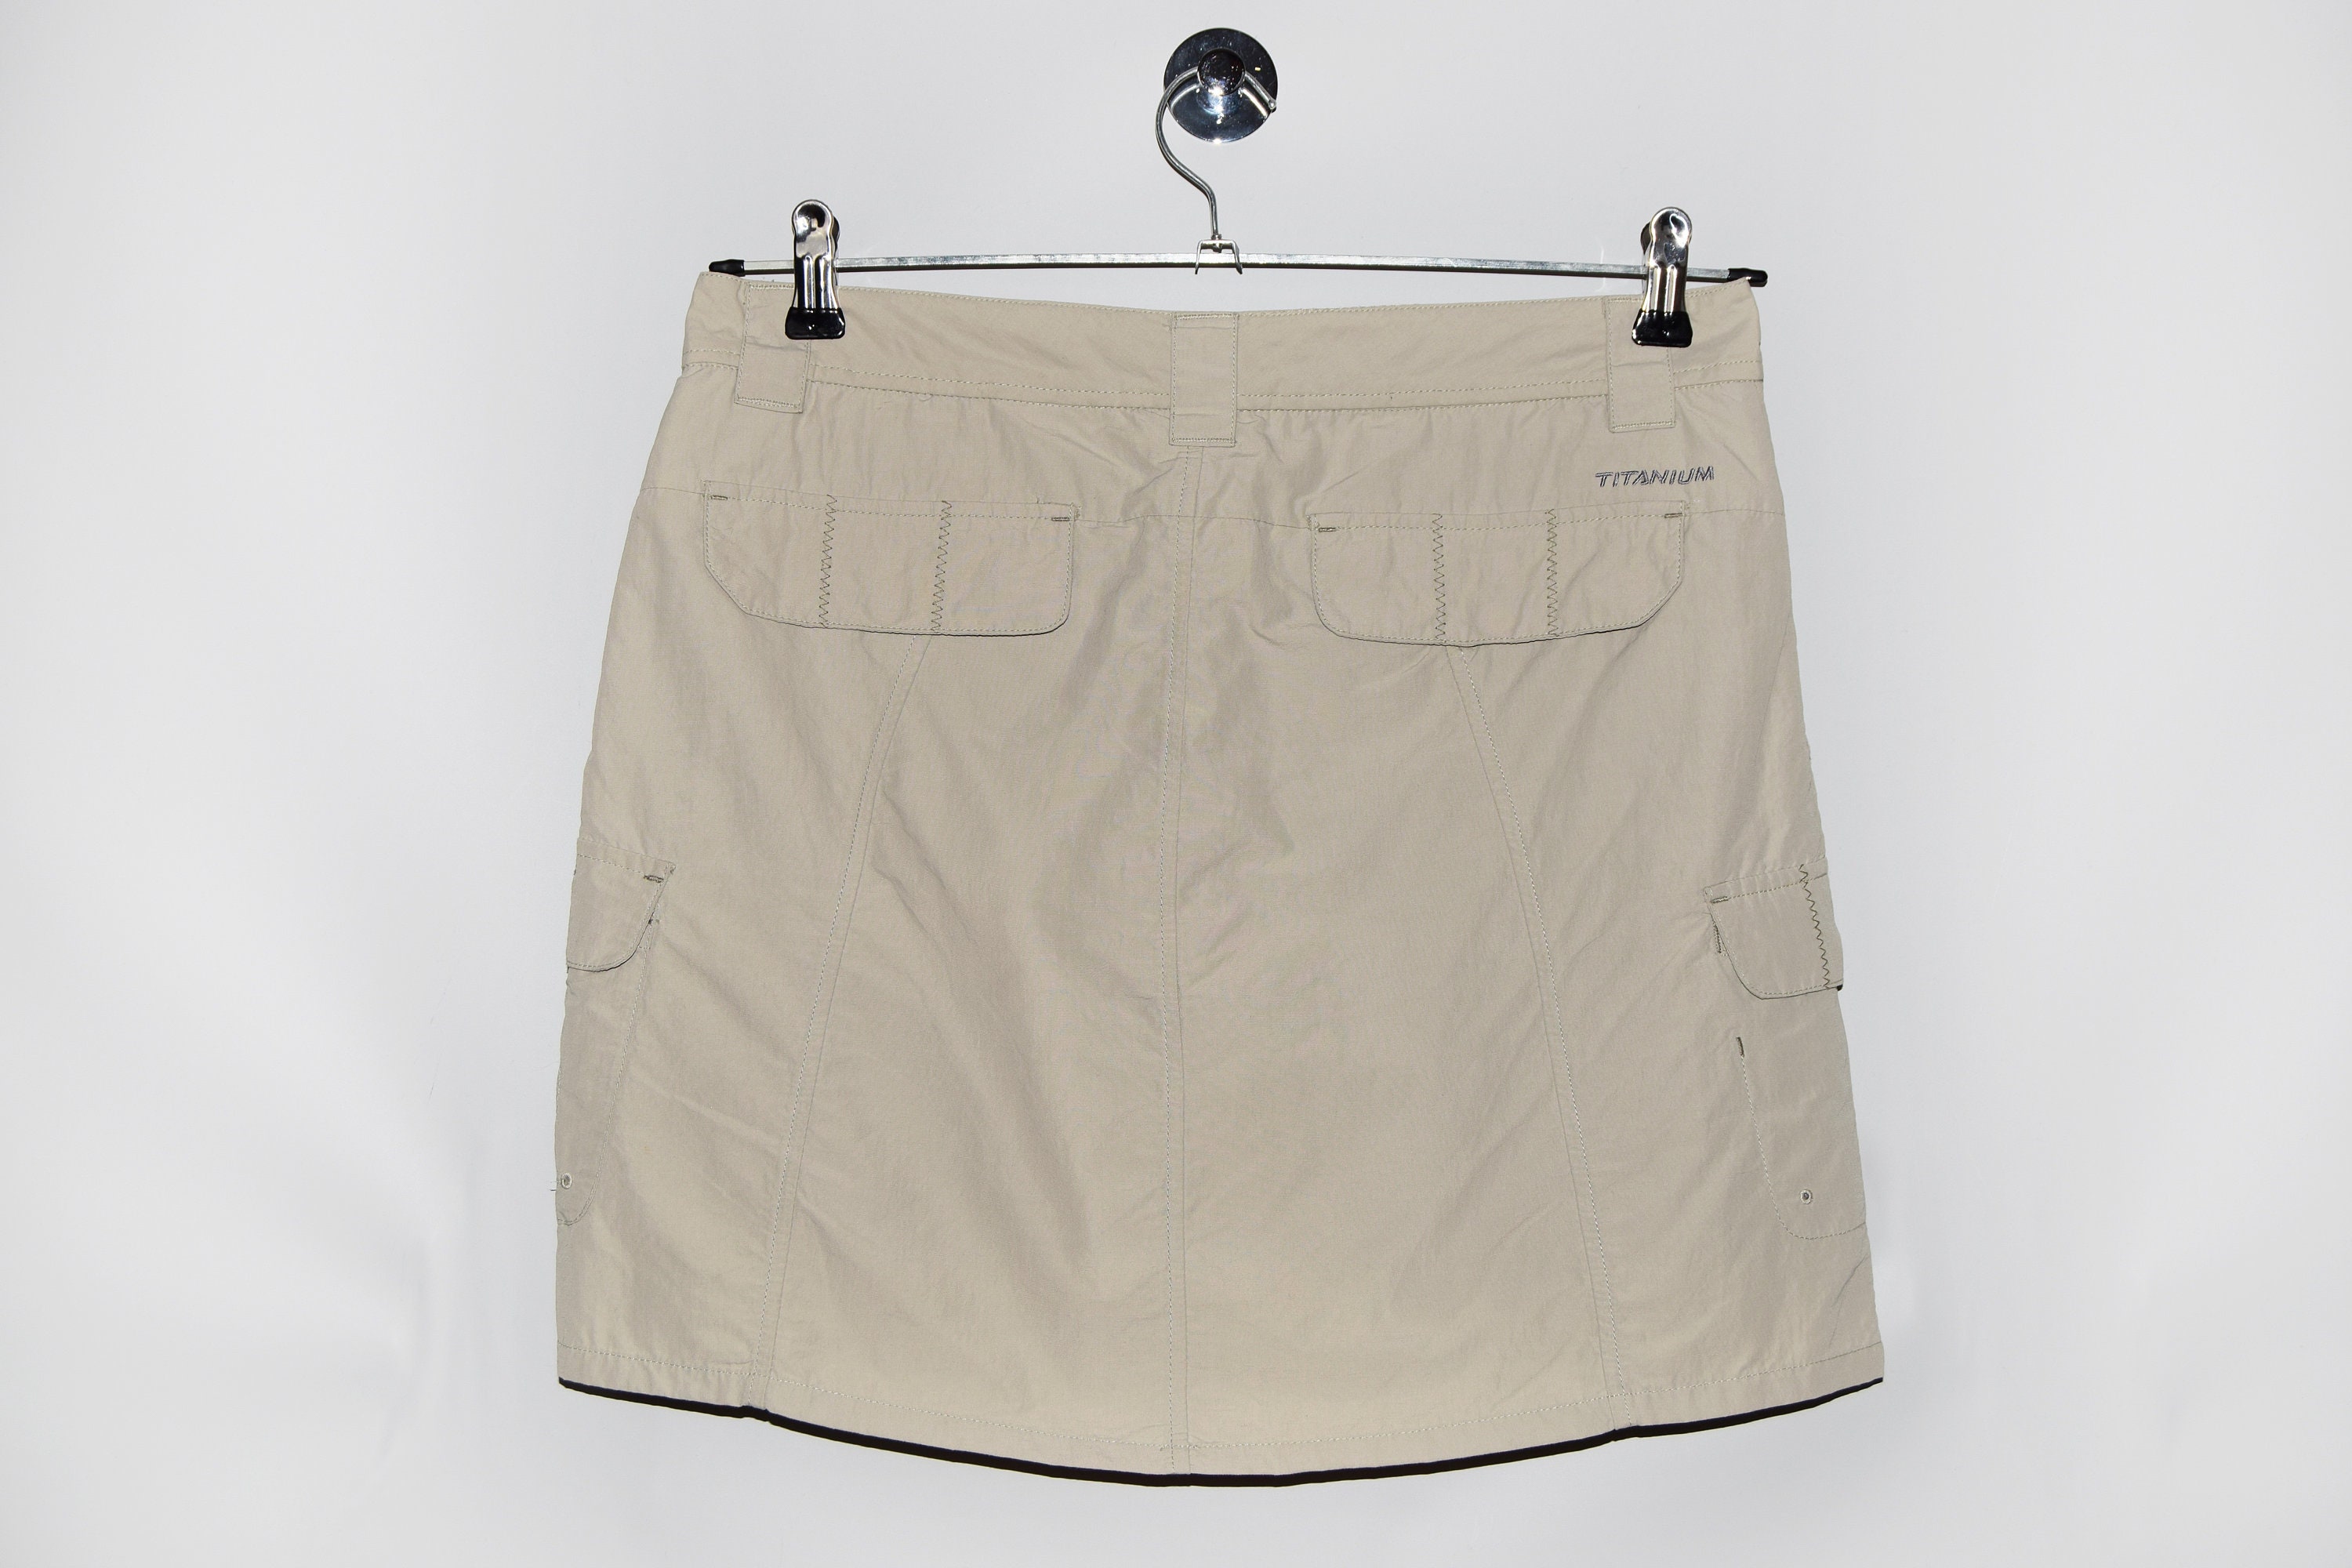 tro kredsløb lanthan Columbia Titanium Skirt Shorts Skort Tan Khaki Beige Camping - Etsy Denmark